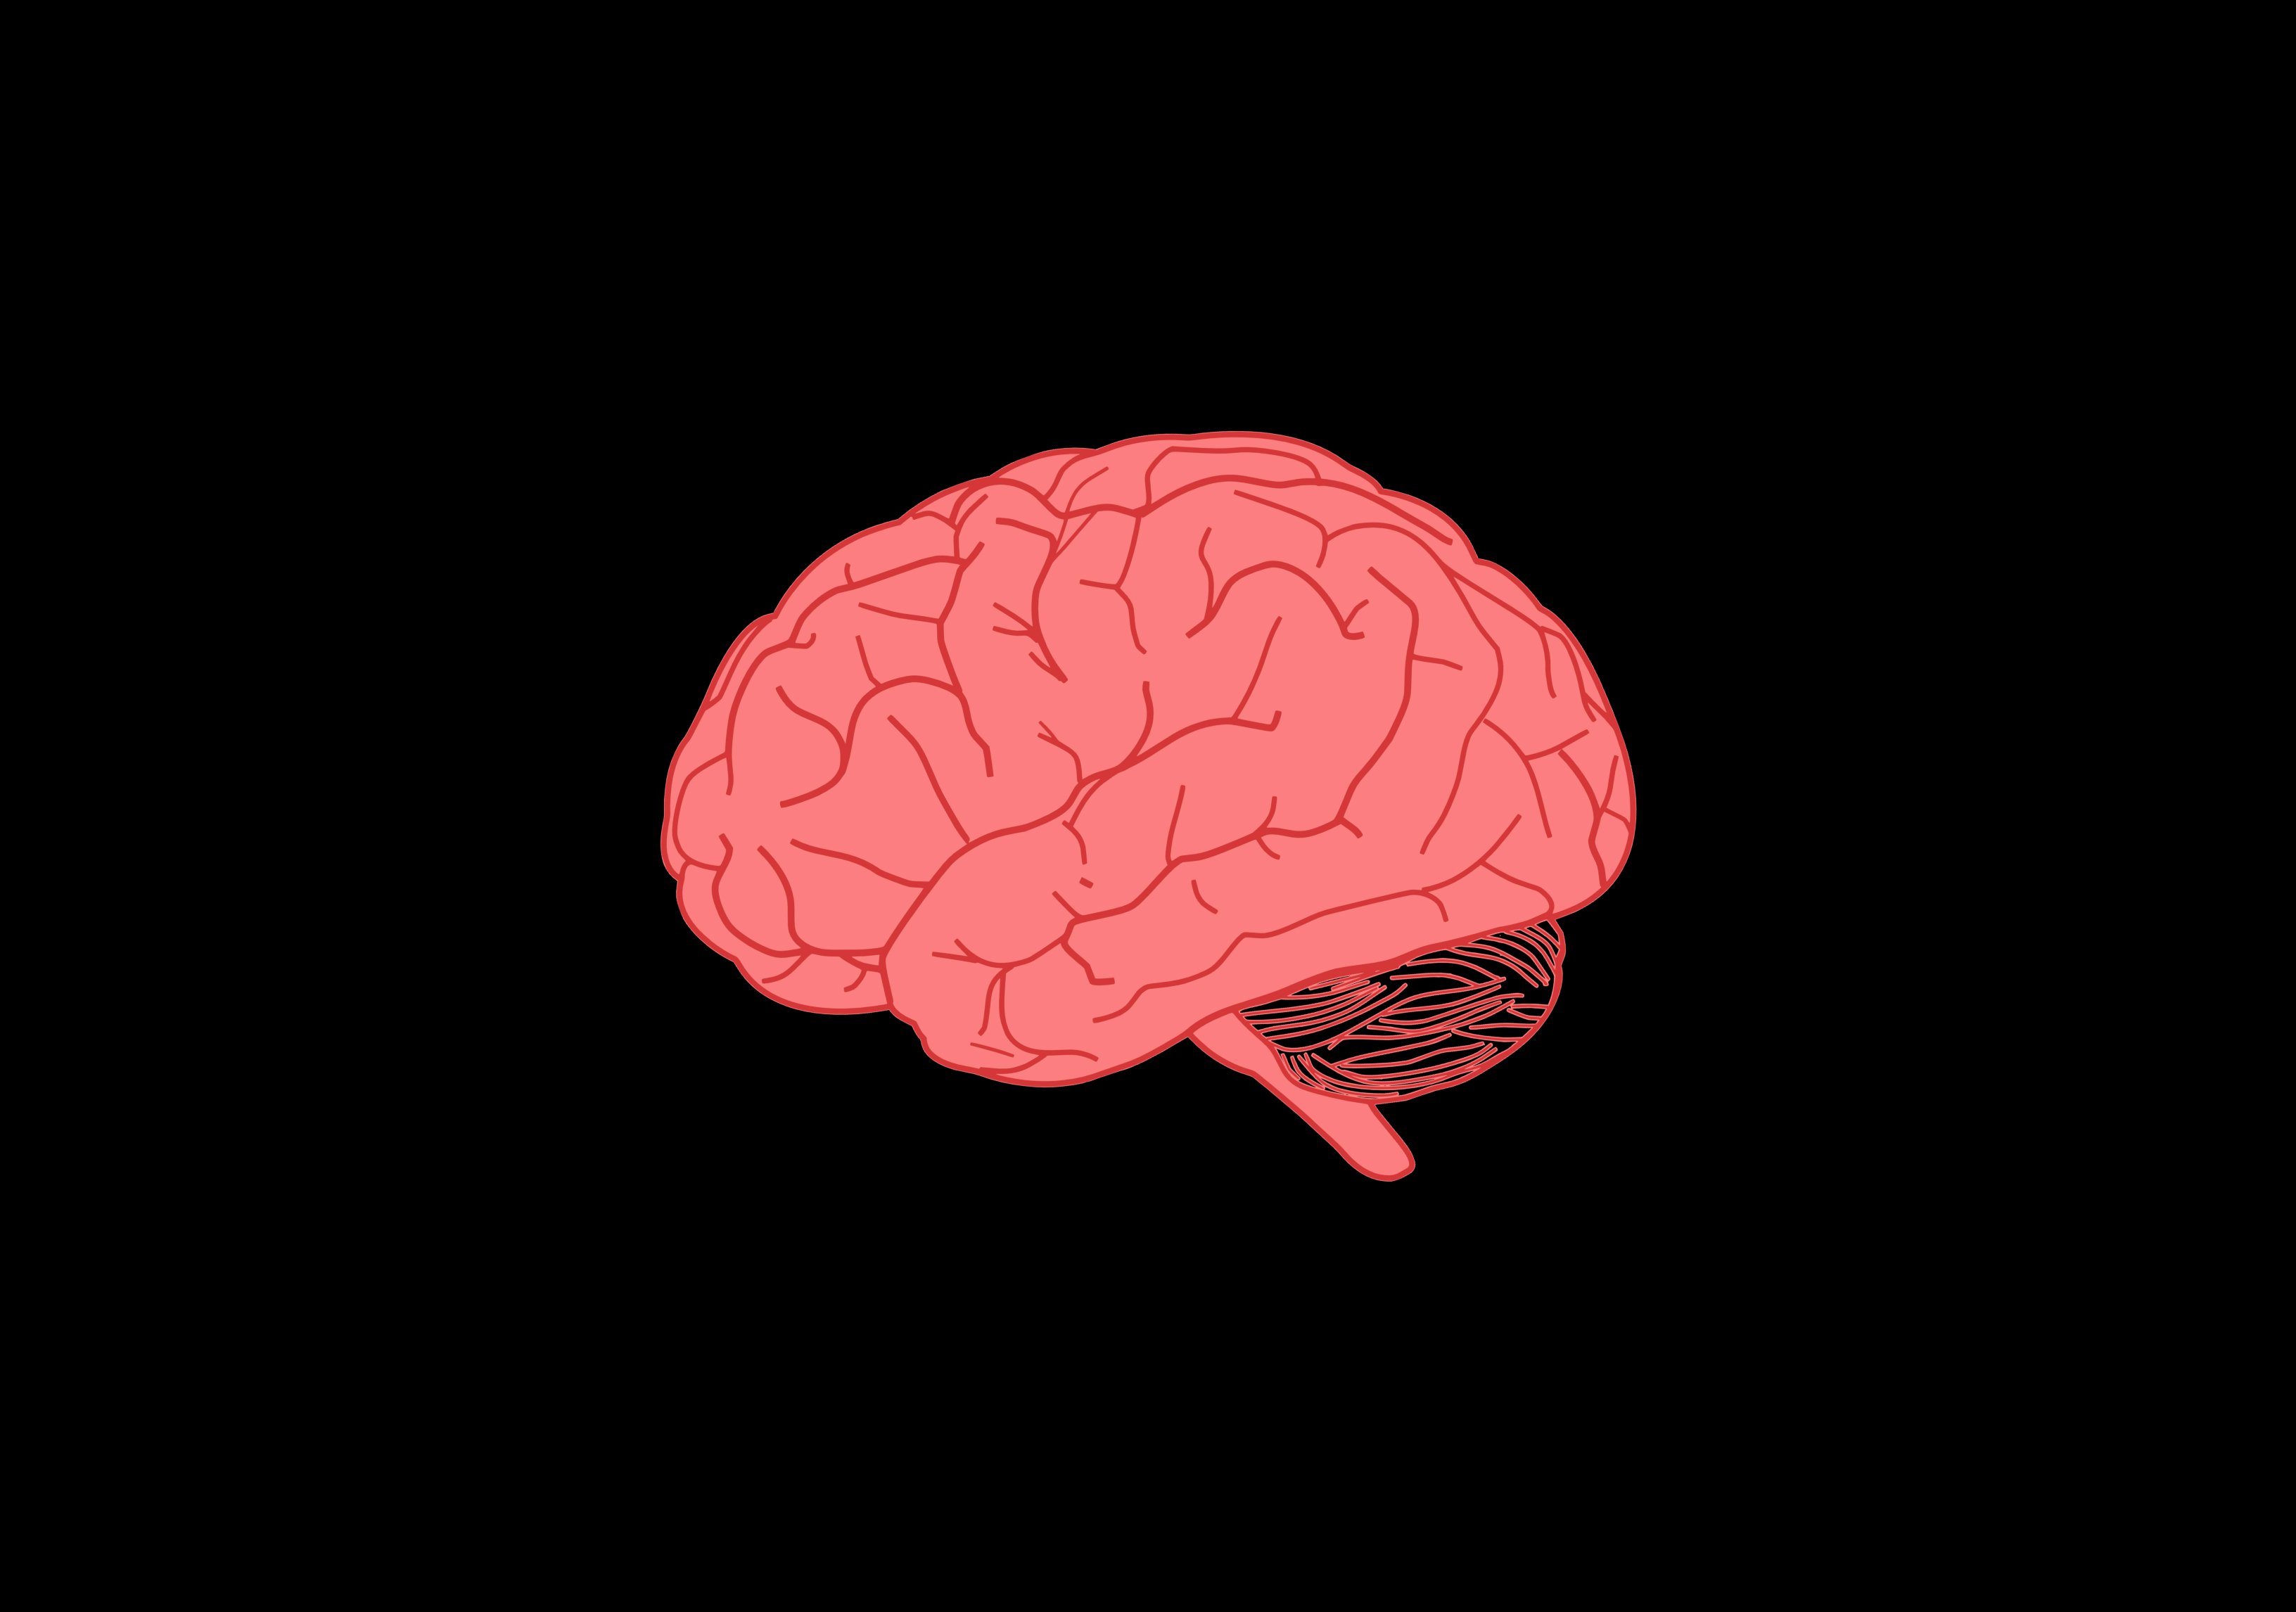 Cervell vermell sobre fons negre